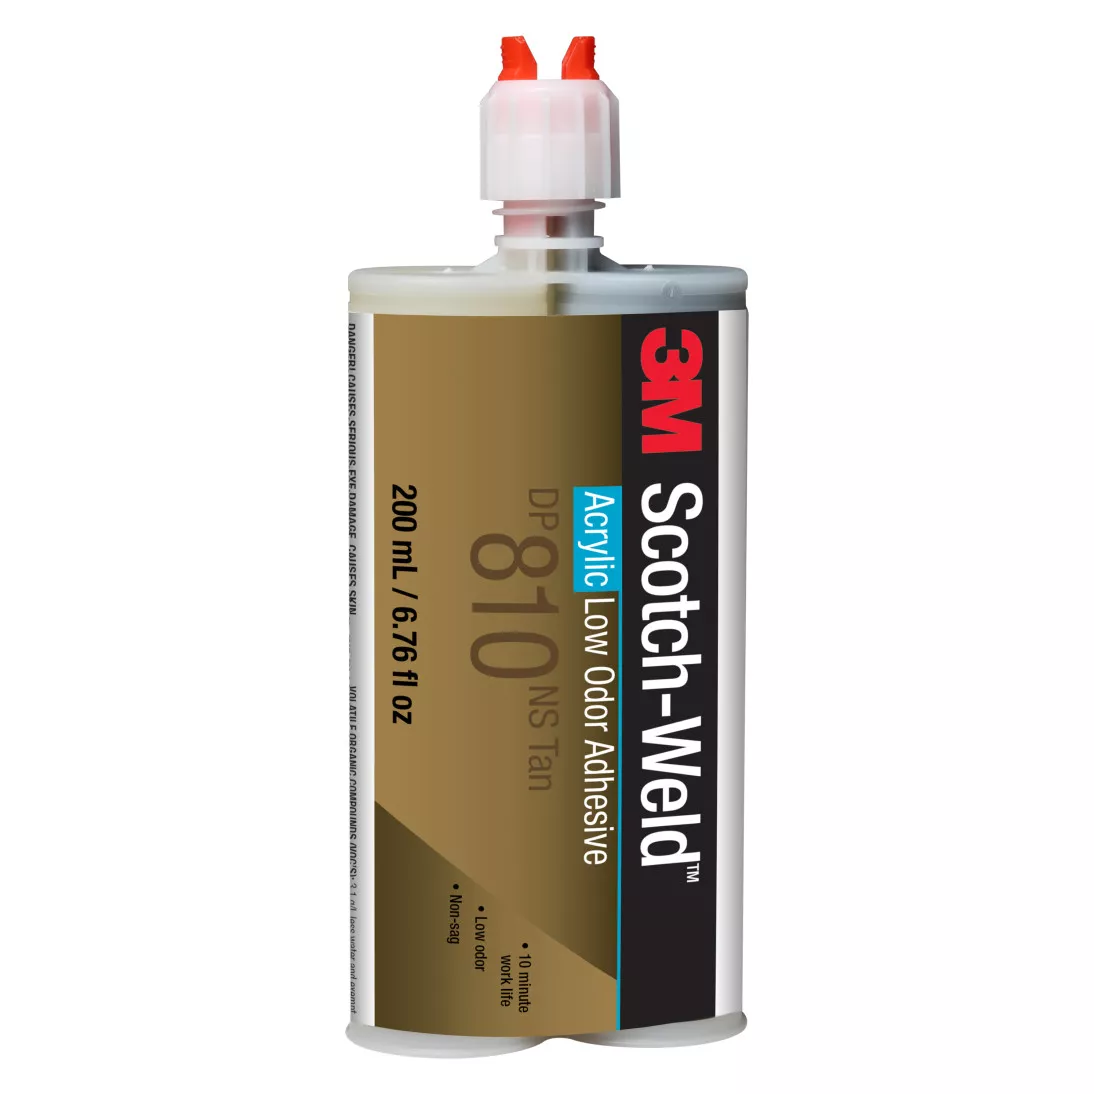 3M™ Scotch-Weld™ Low Odor Acrylic Adhesive DP810NS, Tan, 200 mL Duo-Pak,
12/case